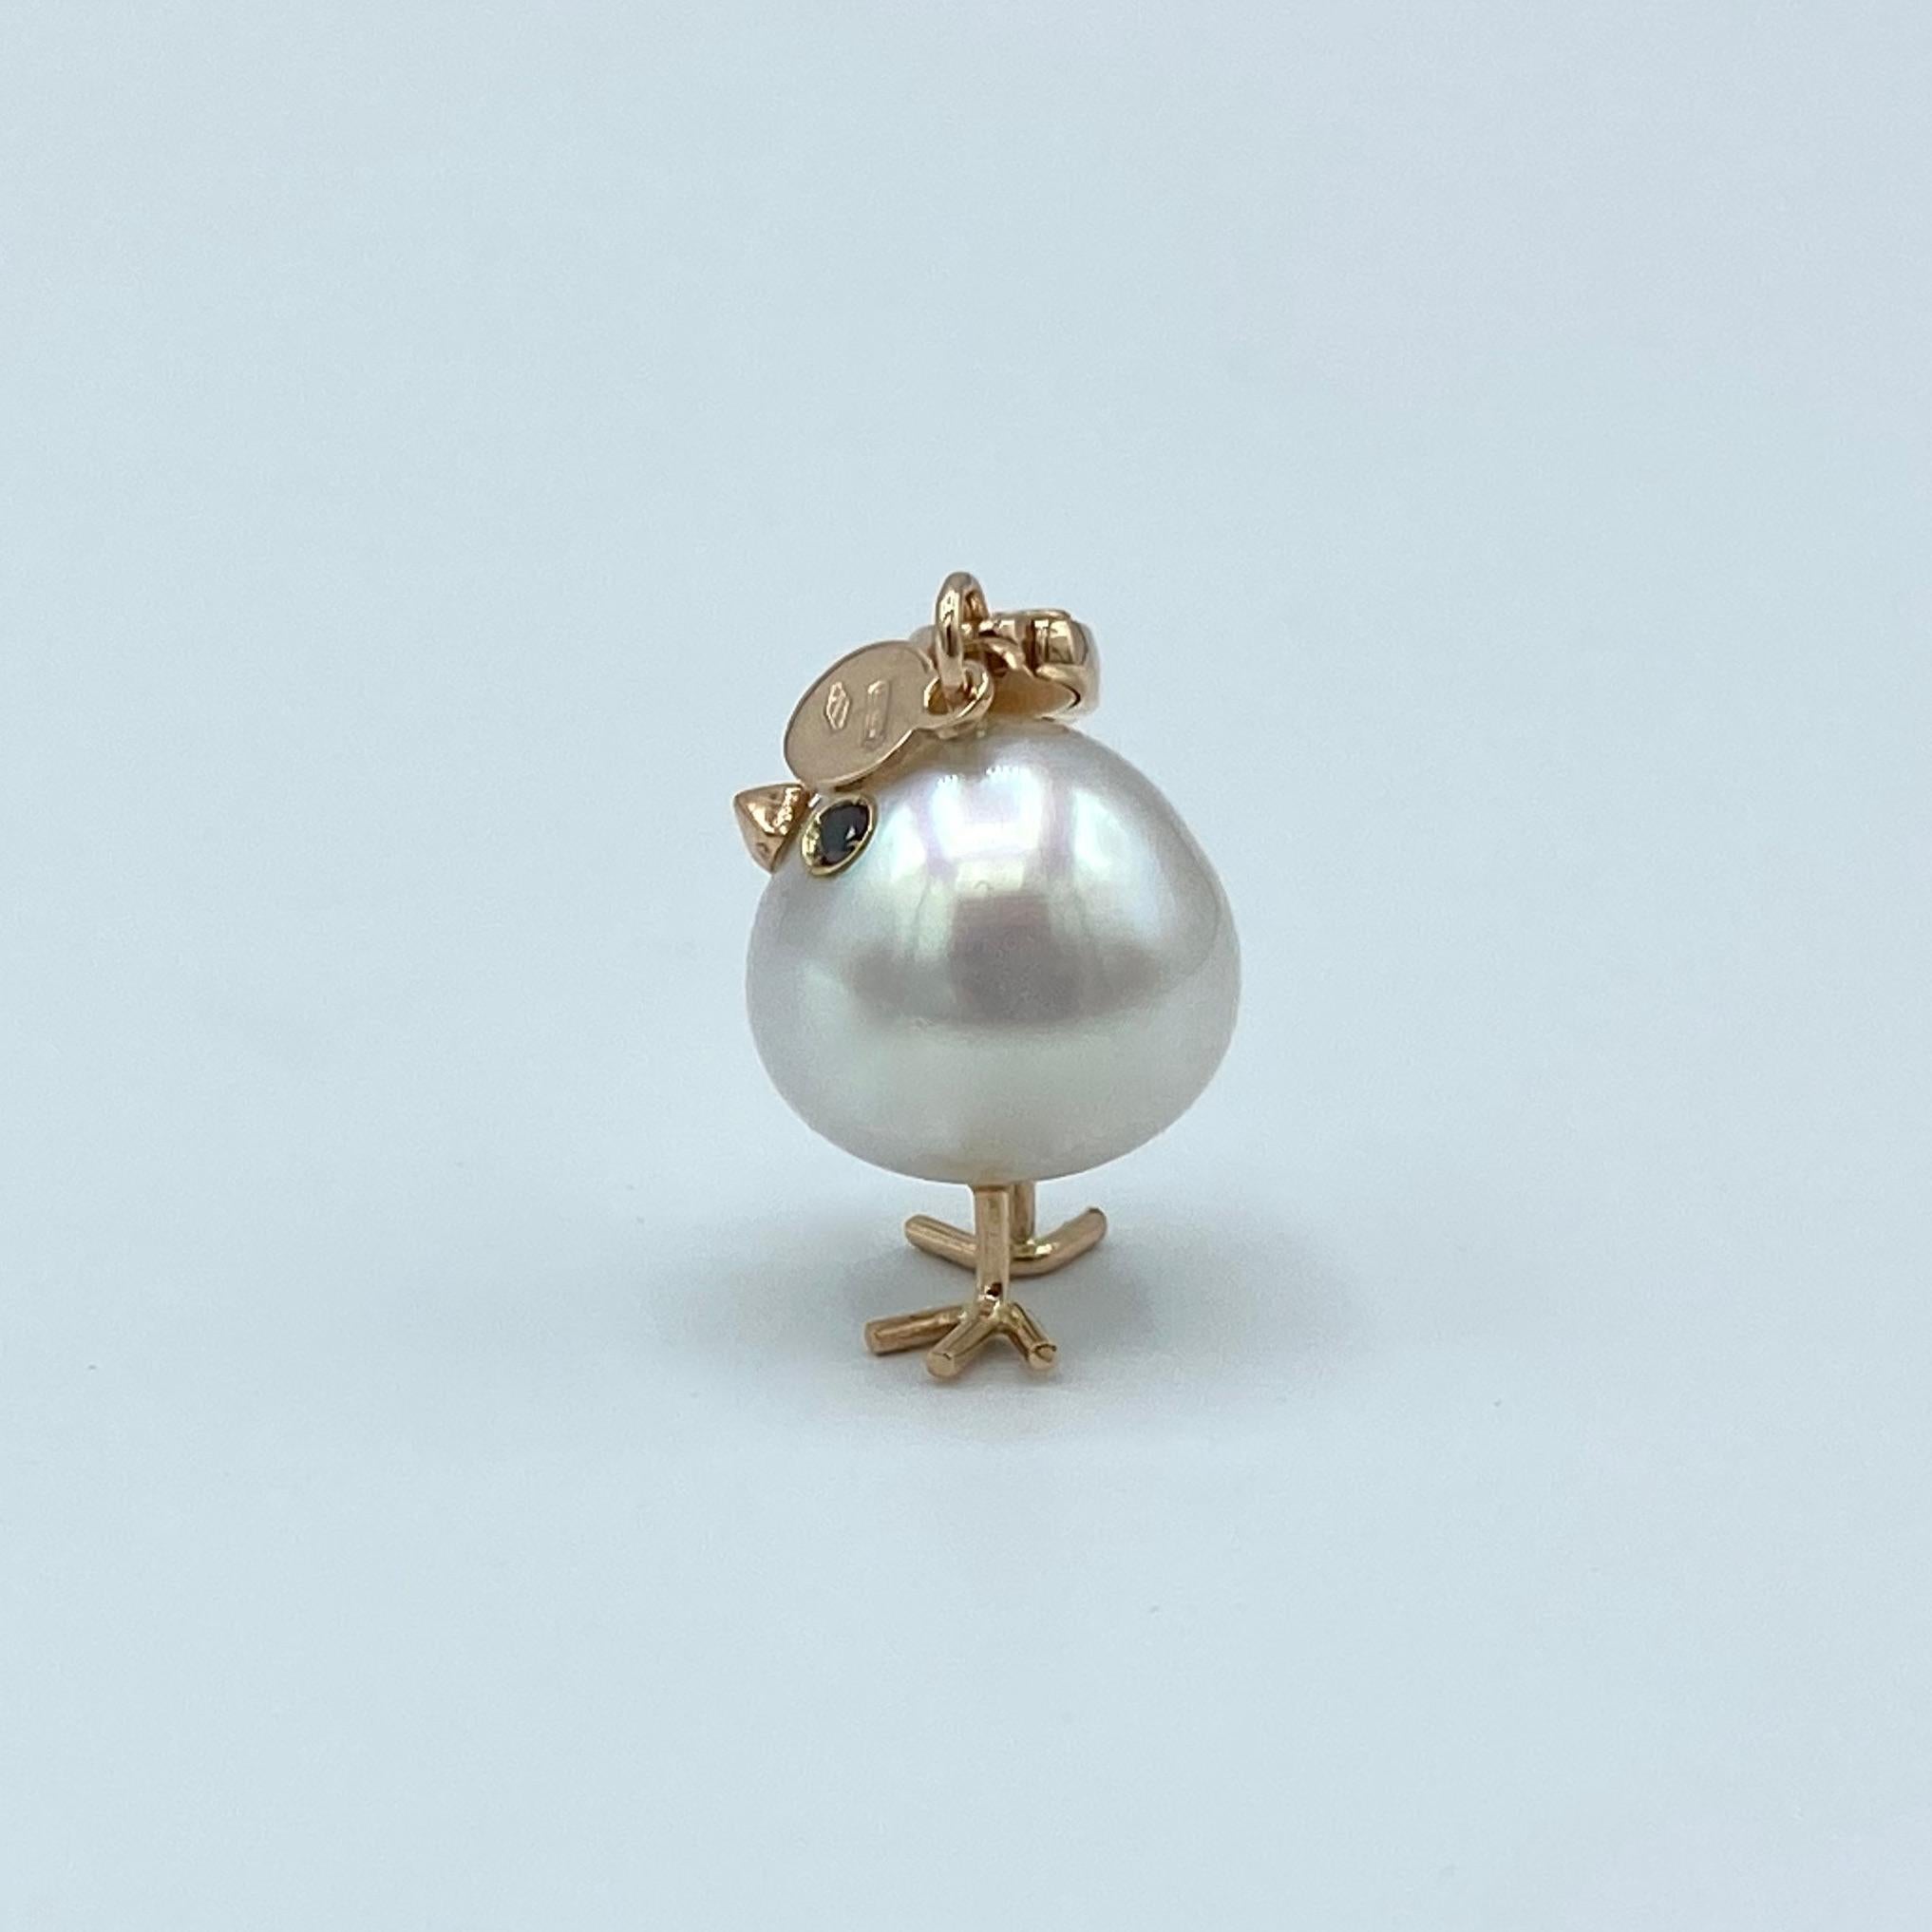 Chick Australian Pearl Black Diamond 18Kt Gold Pendant Necklace or Charm 1